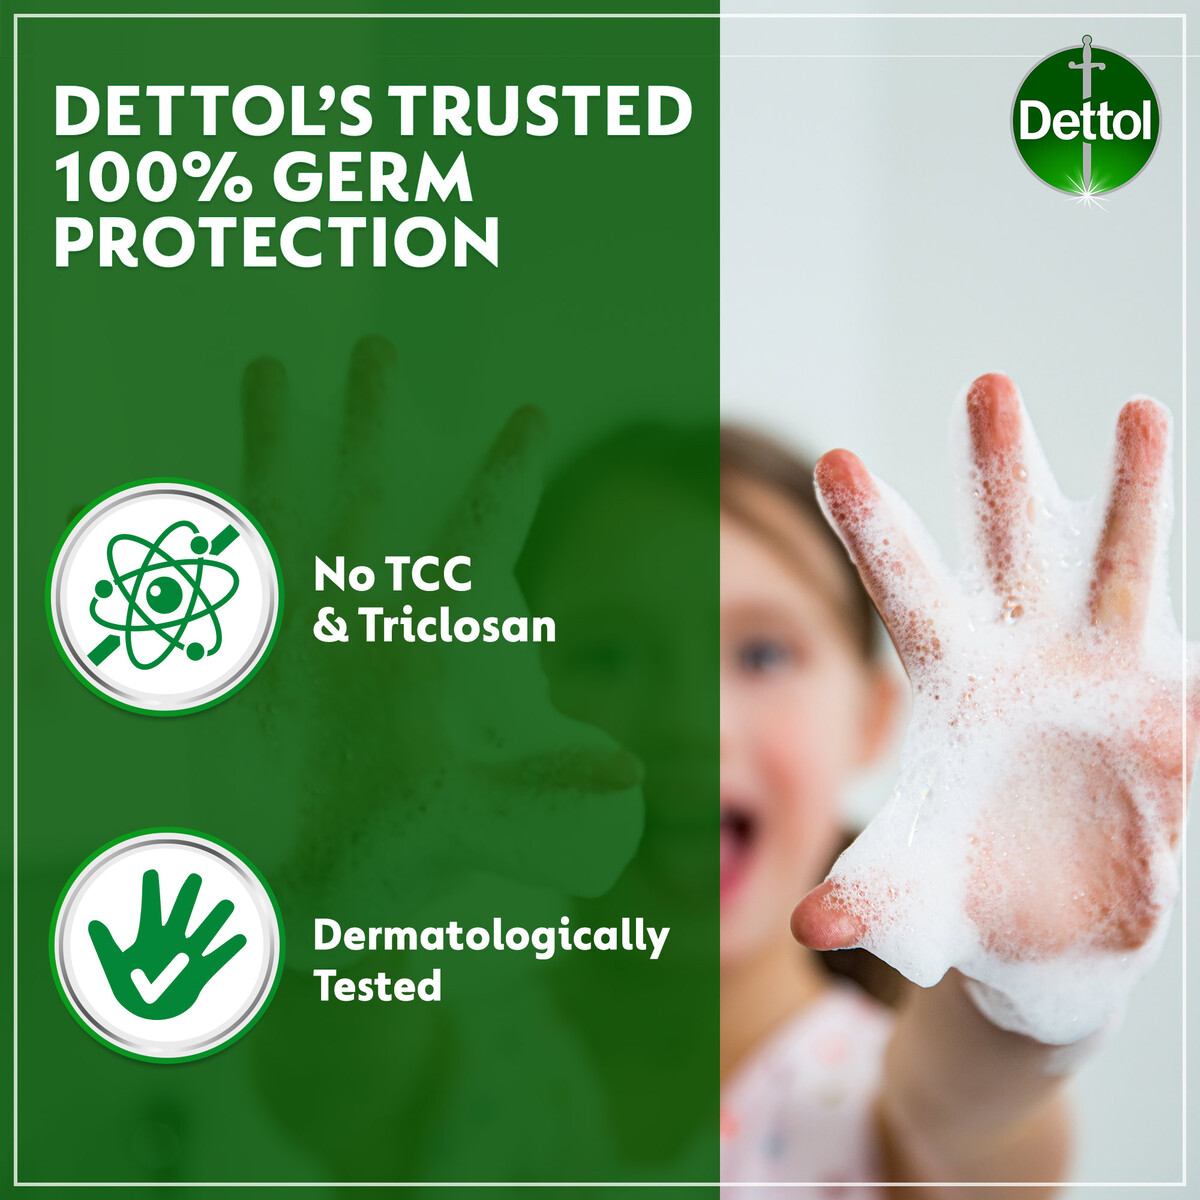 Dettol Skincare Antibacterial Liquid Hand Wash 3 x 200 ml